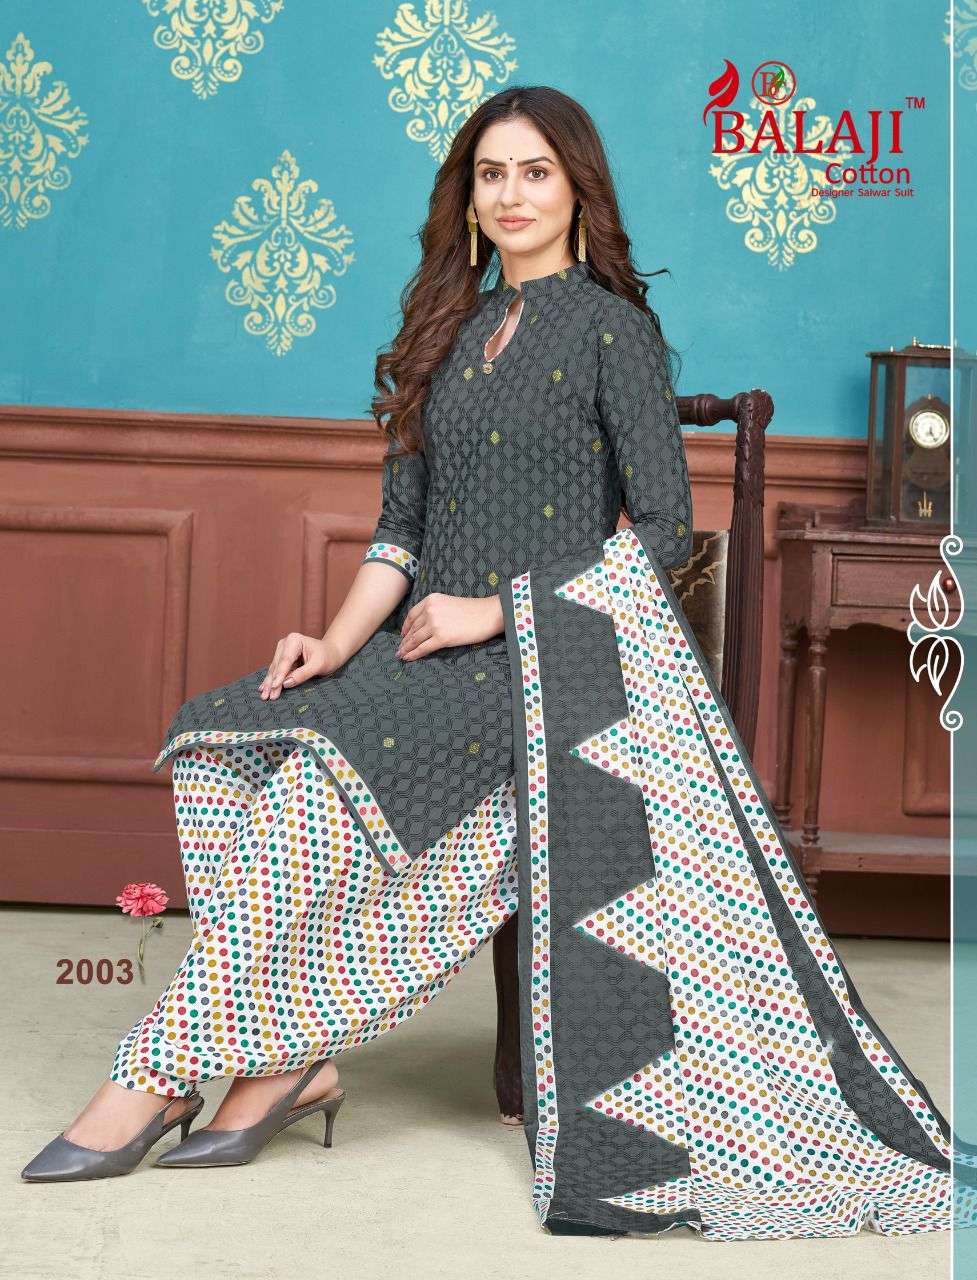 balaji cotton sui dhaga vol 2 stylish designer salwar kameez catalogue online supplier surat